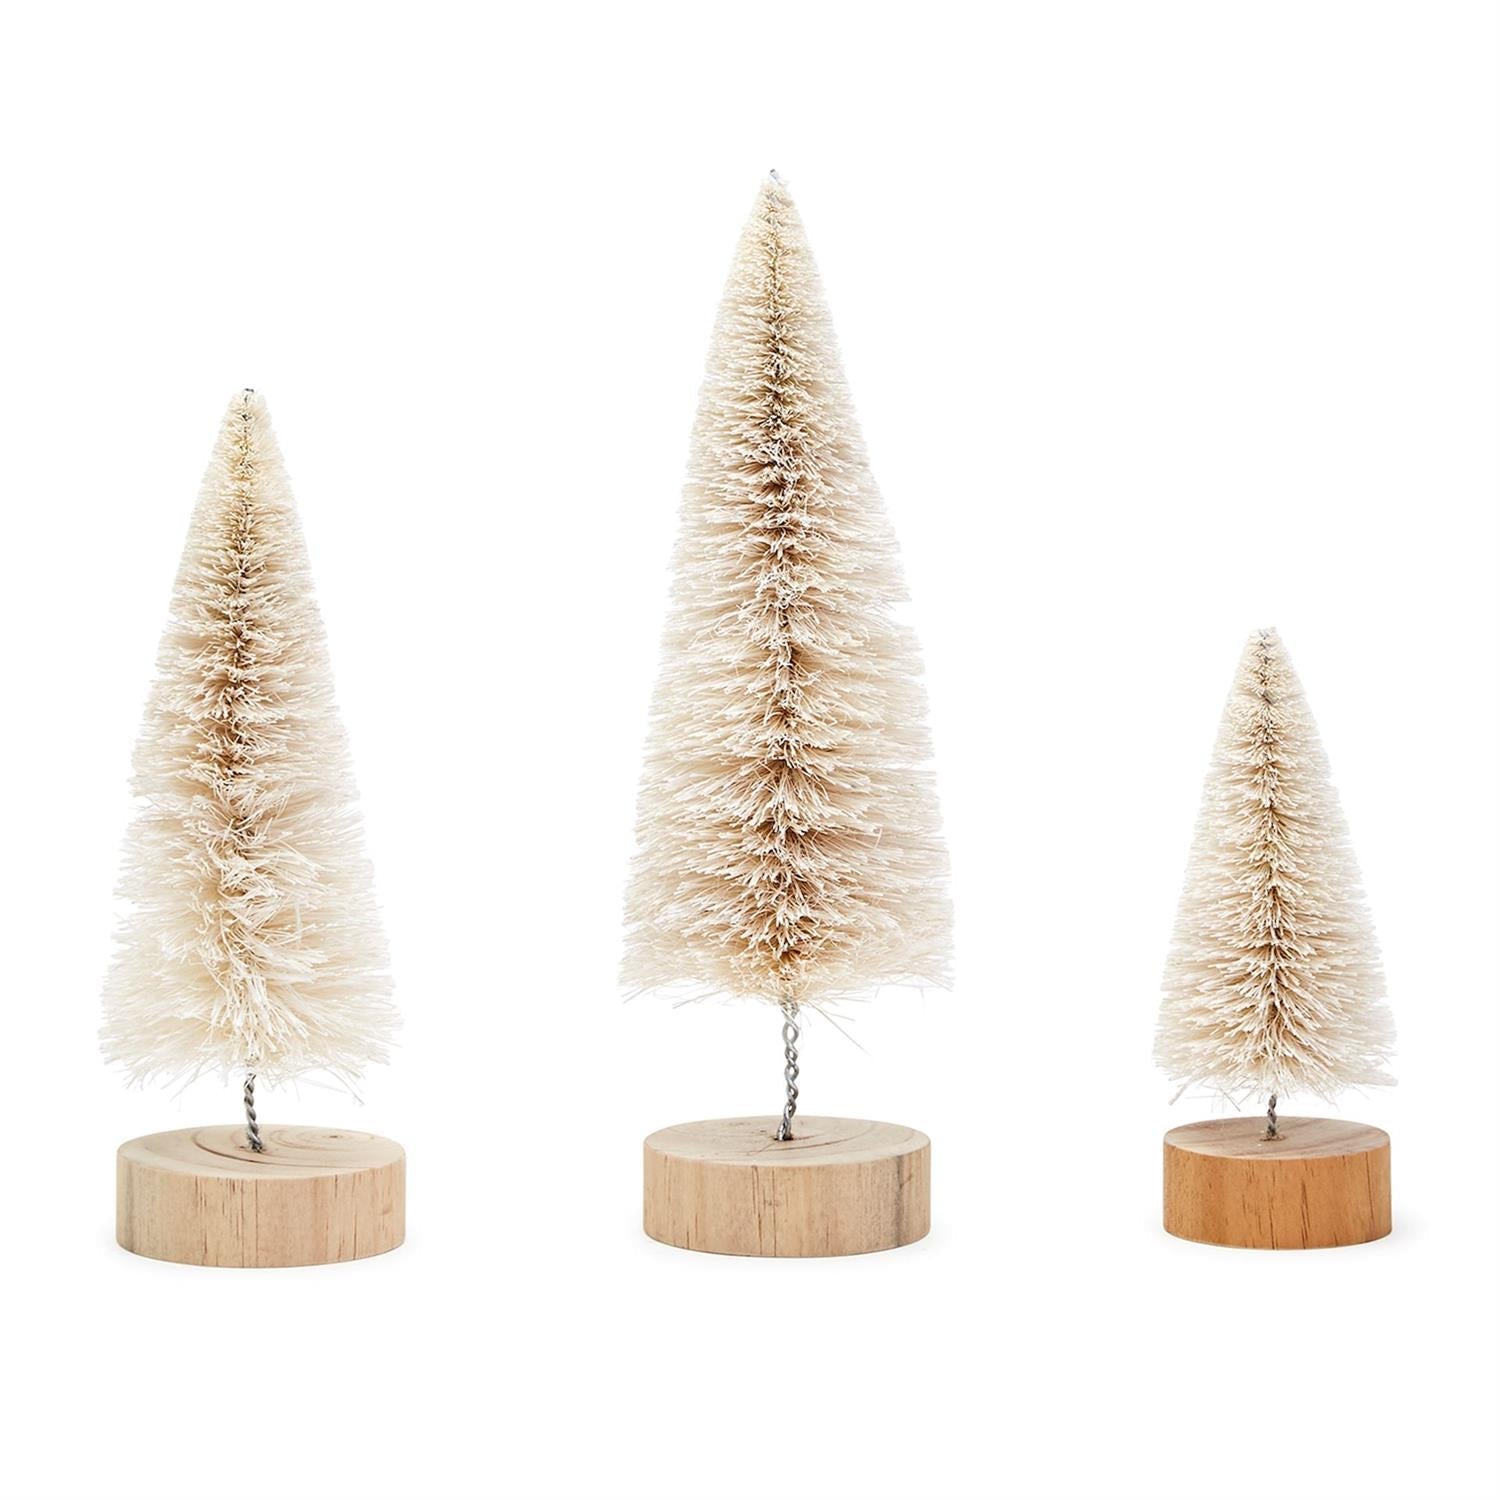 Shop Christmas Bottle Brush Trees with Natural Wood Base - Set of 3 ...